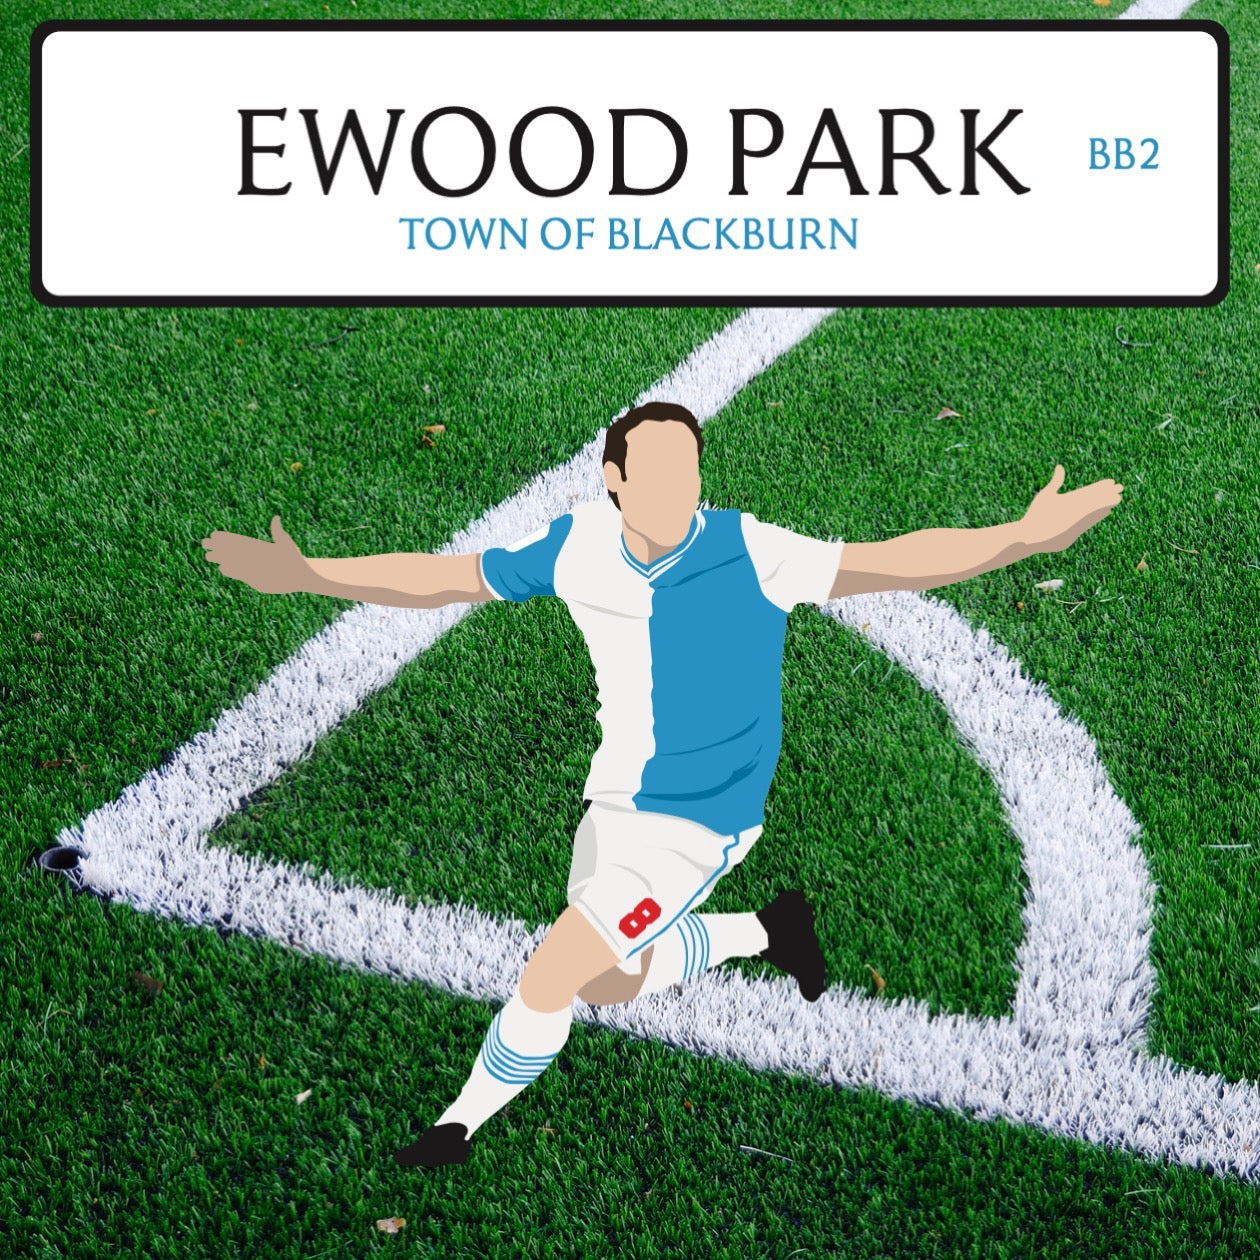 Ewood Park Wing Chair (Blackburn Rovers FC)